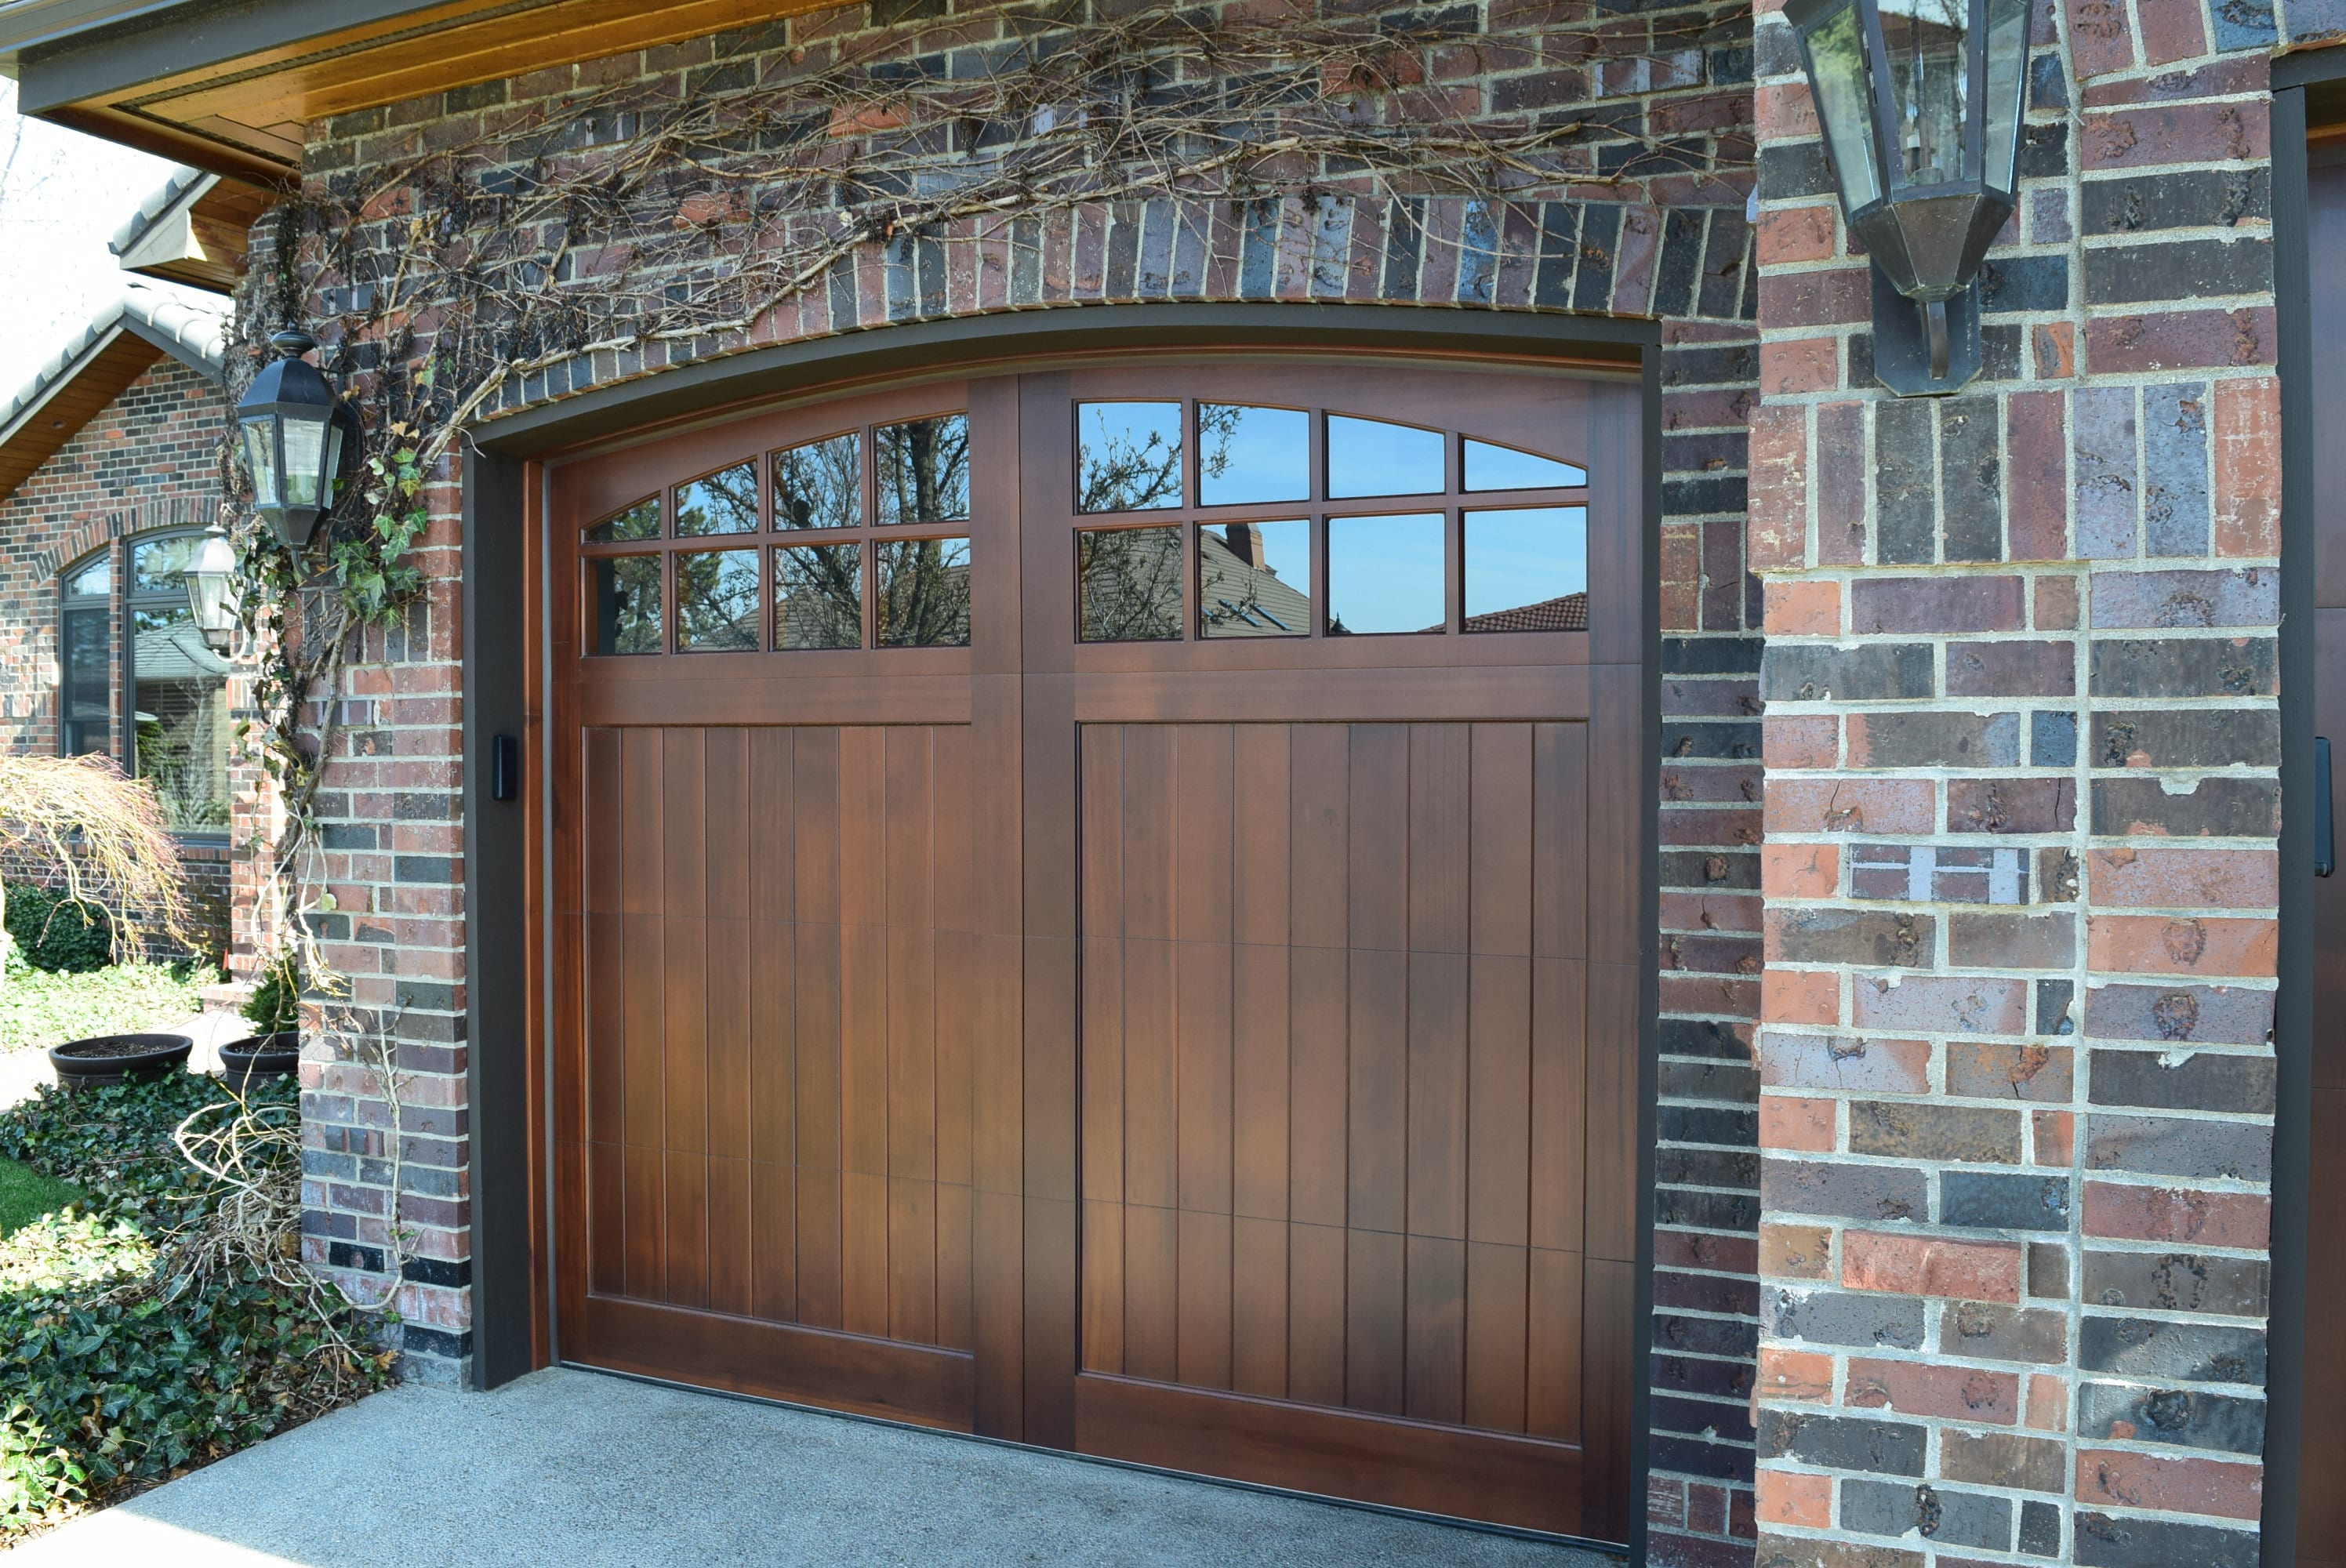 Wood Garage Doors With Windows Design Ideas - Image to u